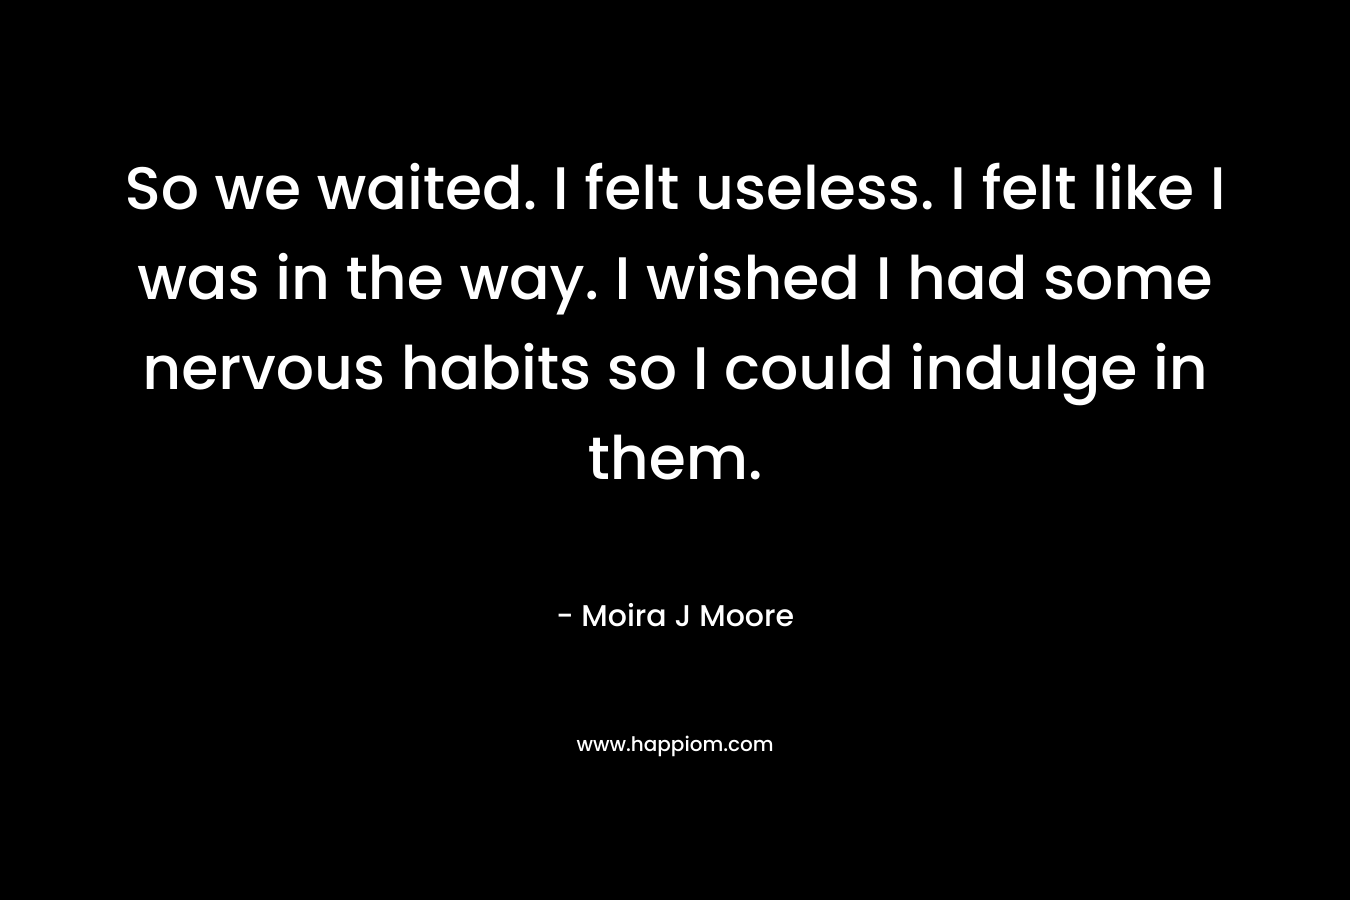 So we waited. I felt useless. I felt like I was in the way. I wished I had some nervous habits so I could indulge in them. – Moira J Moore